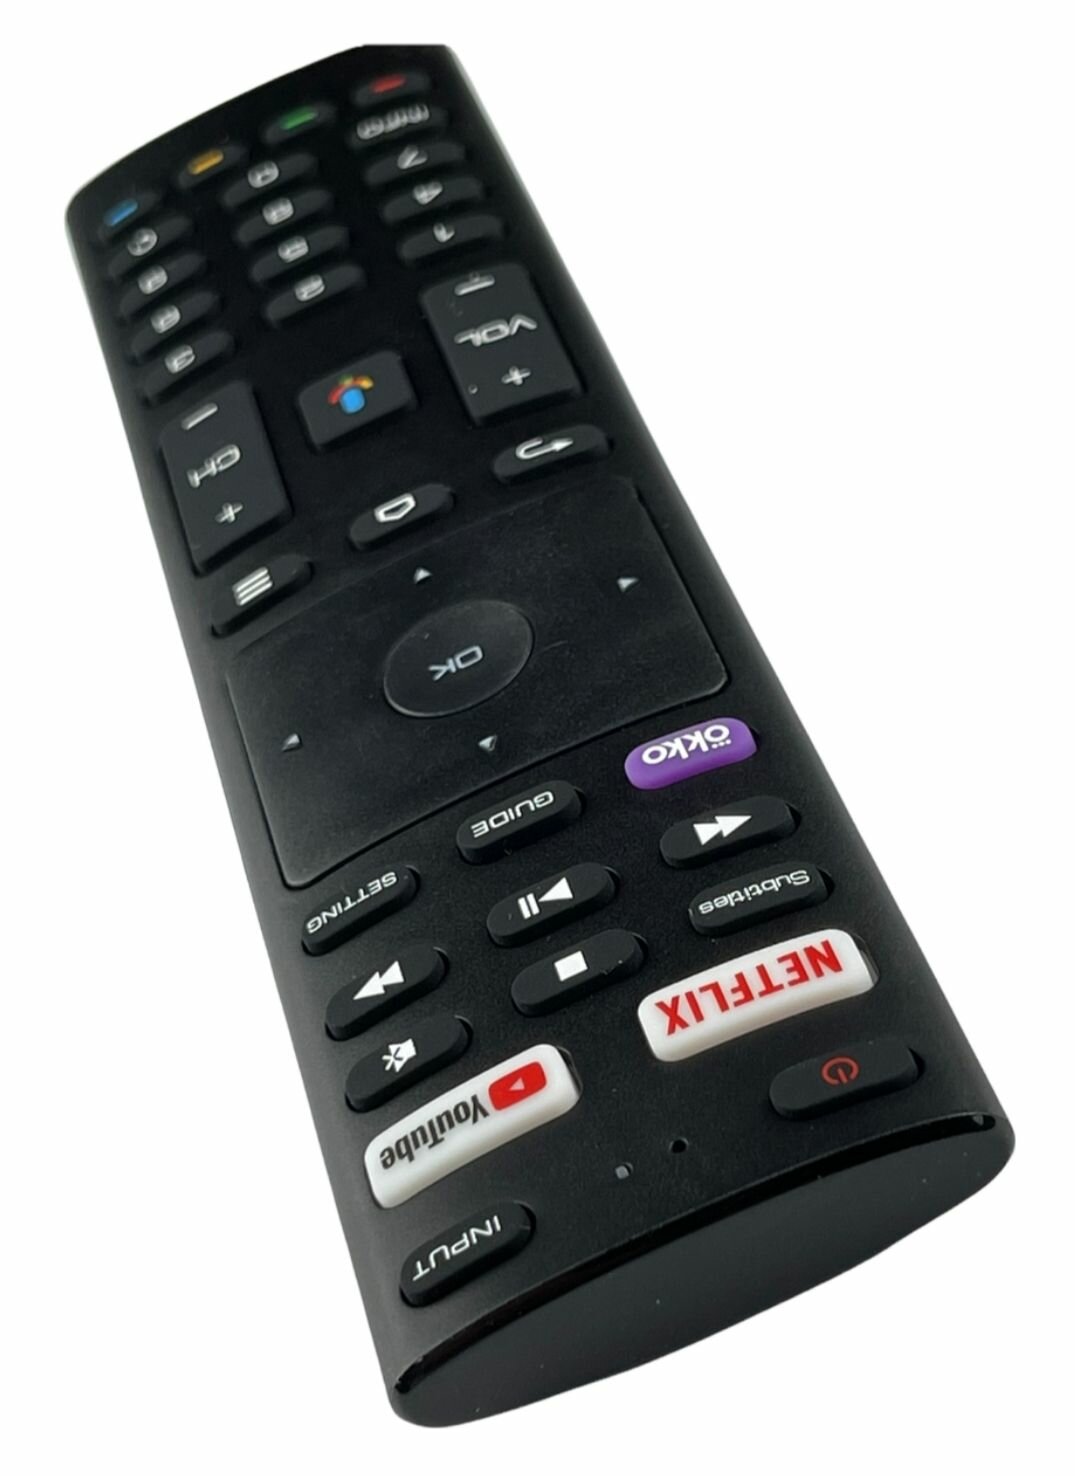 Голосовой пульт для JVC/джи ви си /жвк KT1942-HG (RC-20) телевизора с функциями YouTube Okko Netflix